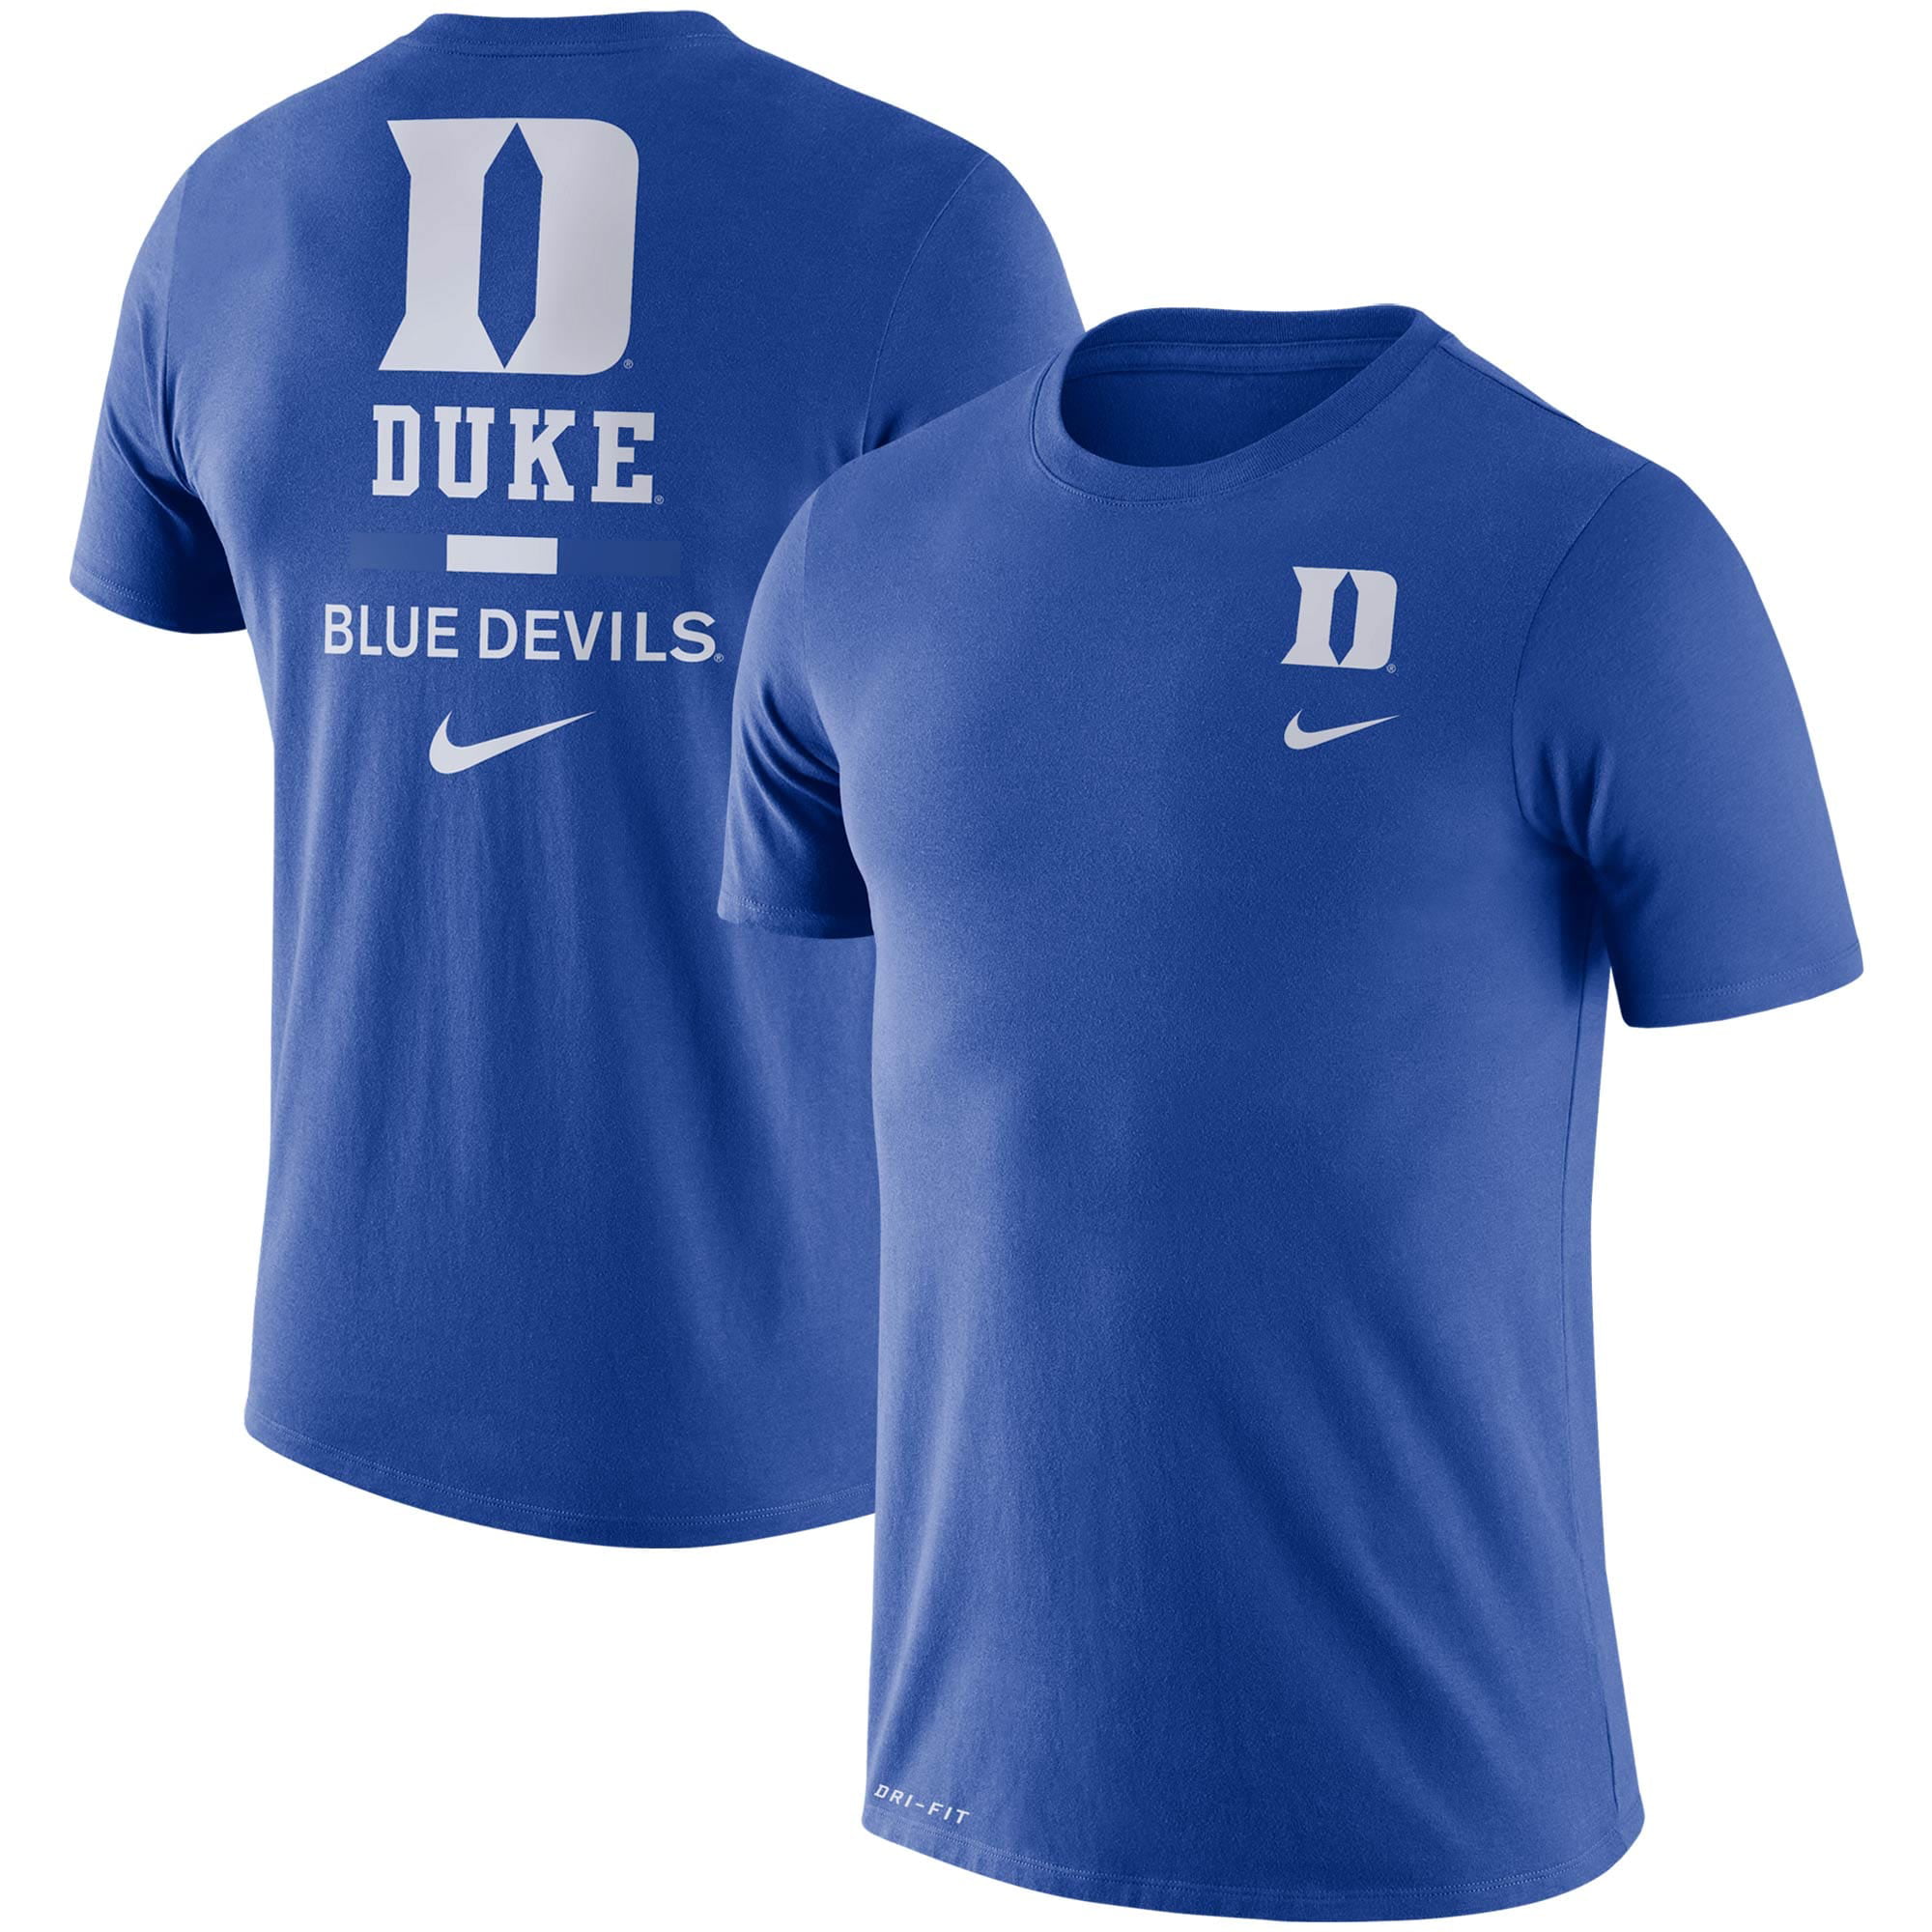 Nike - Duke Blue Devils Nike DNA Logo Performance T-Shirt - Royal ...